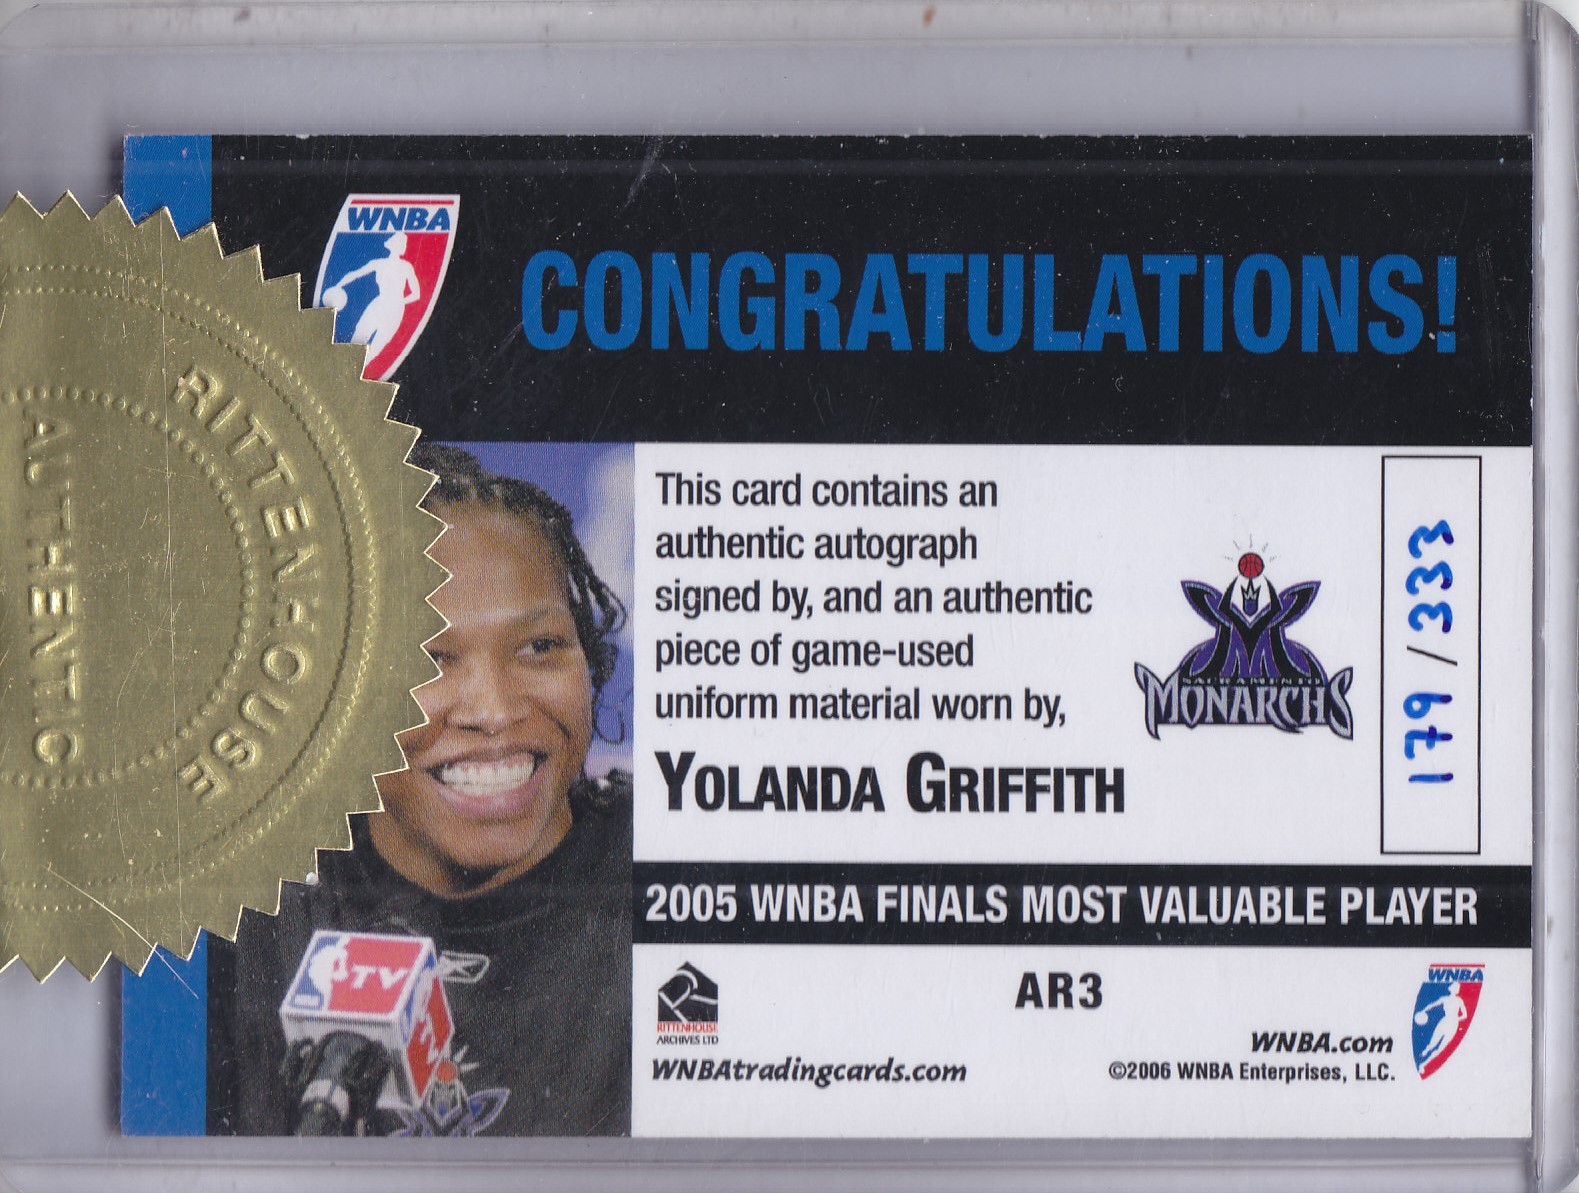 2006 WNBA Toppers #AR3 Yolanda Griffith JSY AU/333 back image